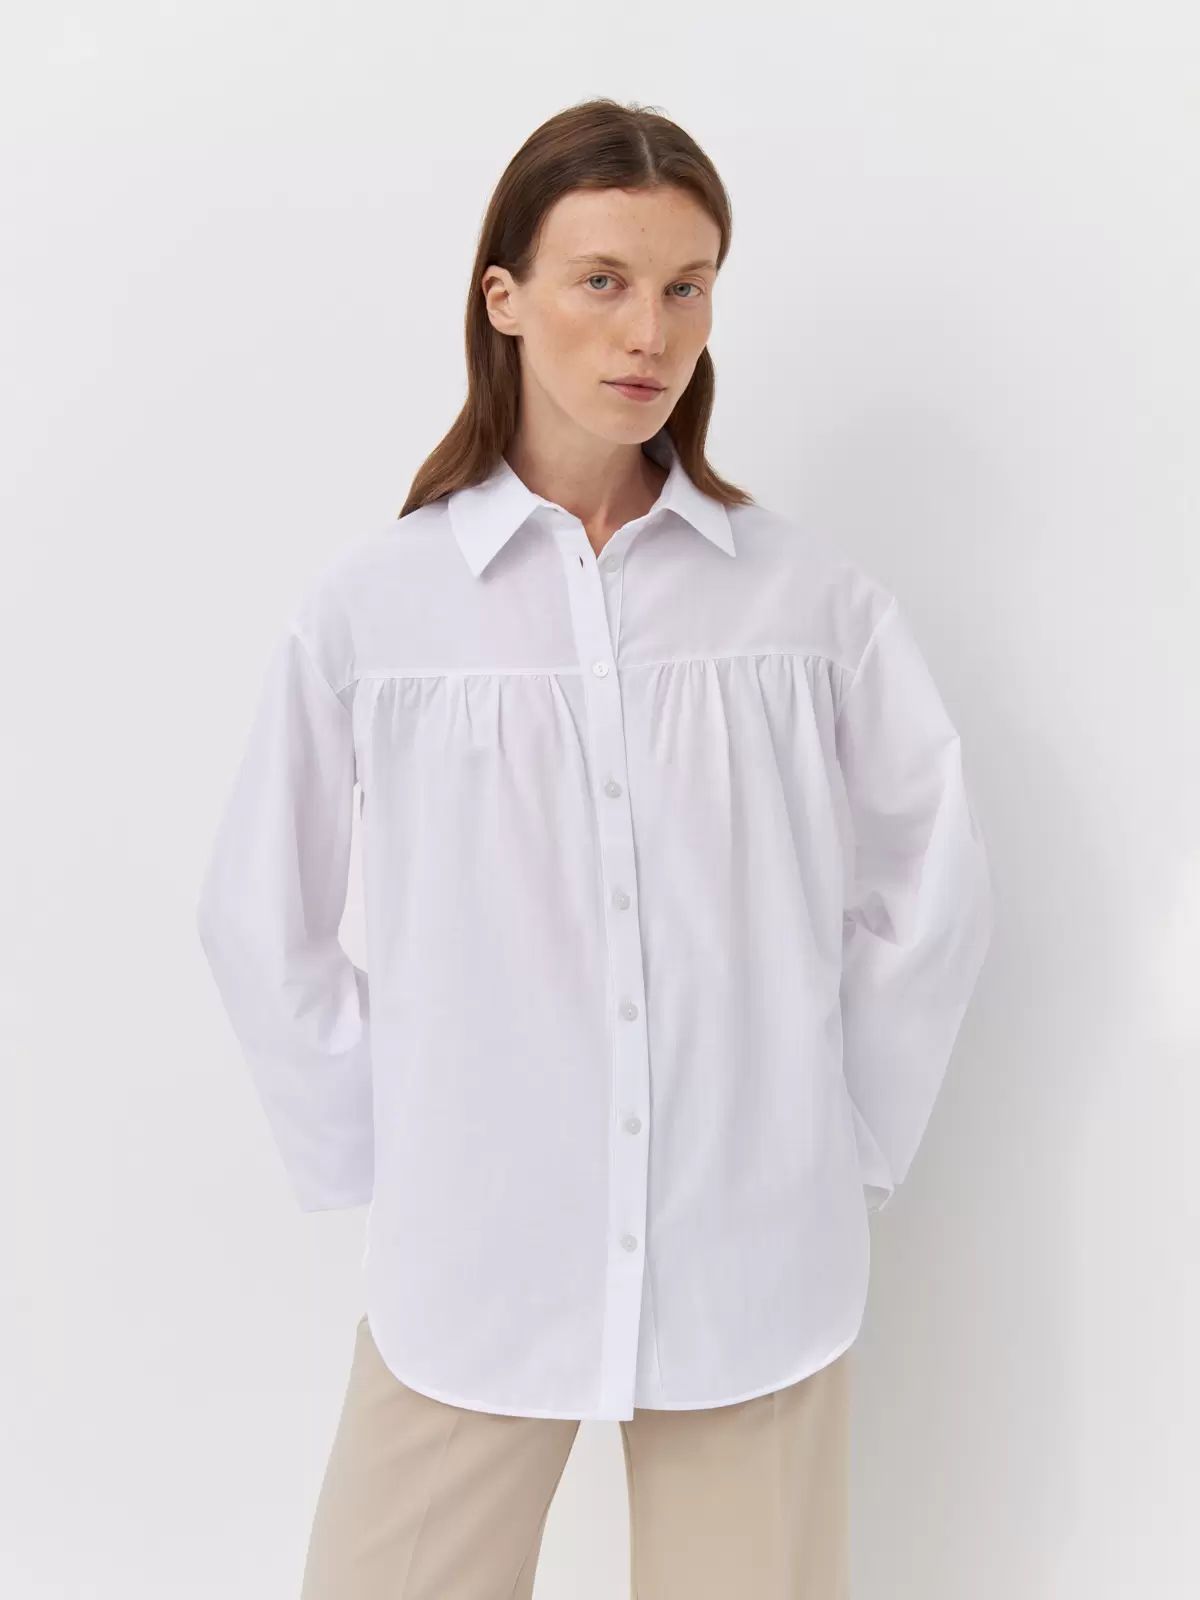 Рубашка женская Arive ARV-WS-10521-008 белая, размер XS